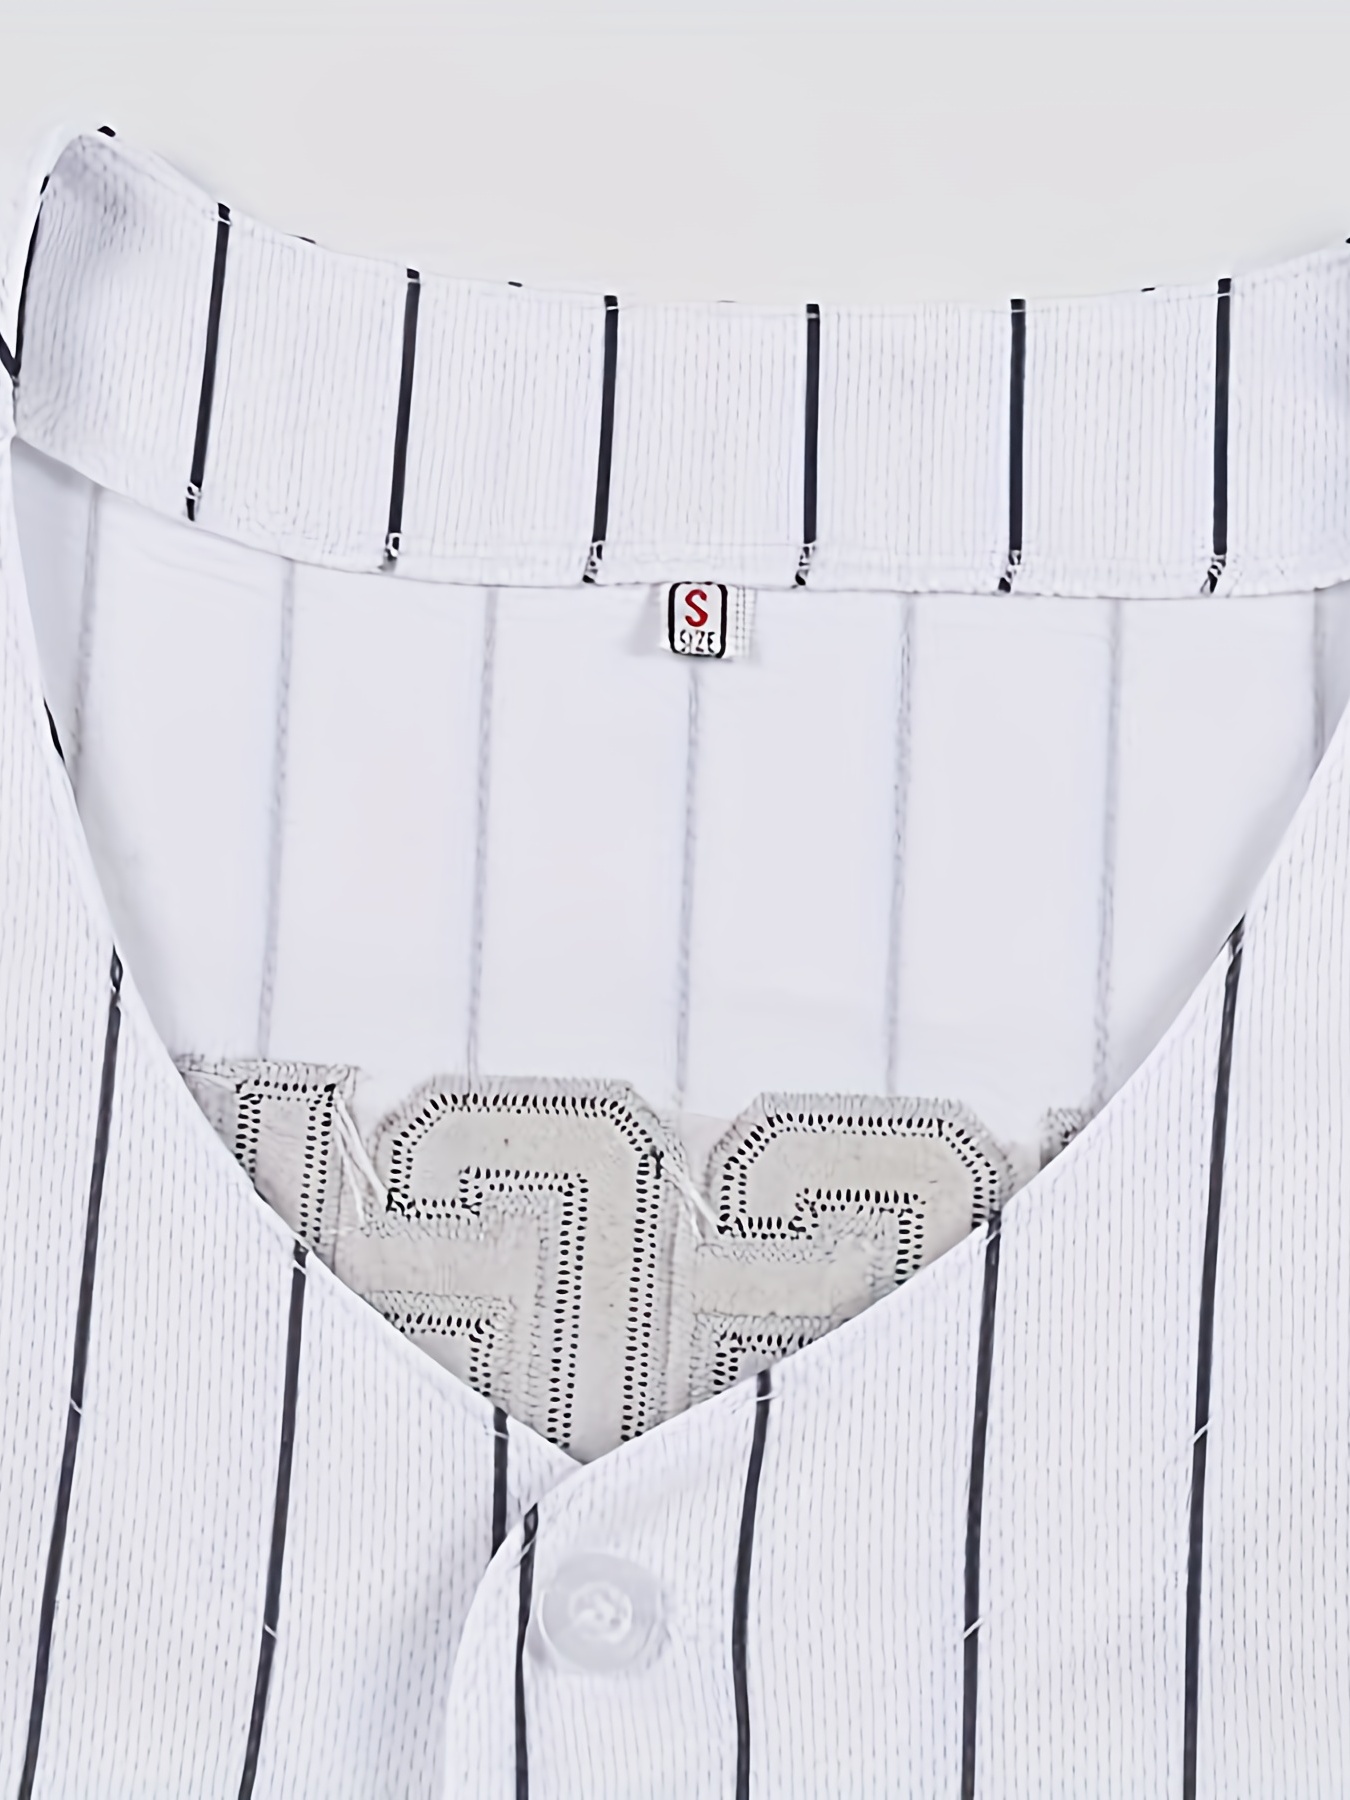 Adult/Youth Sleeveless Yankee Pinstripe Button Front Baseball Uniform Set